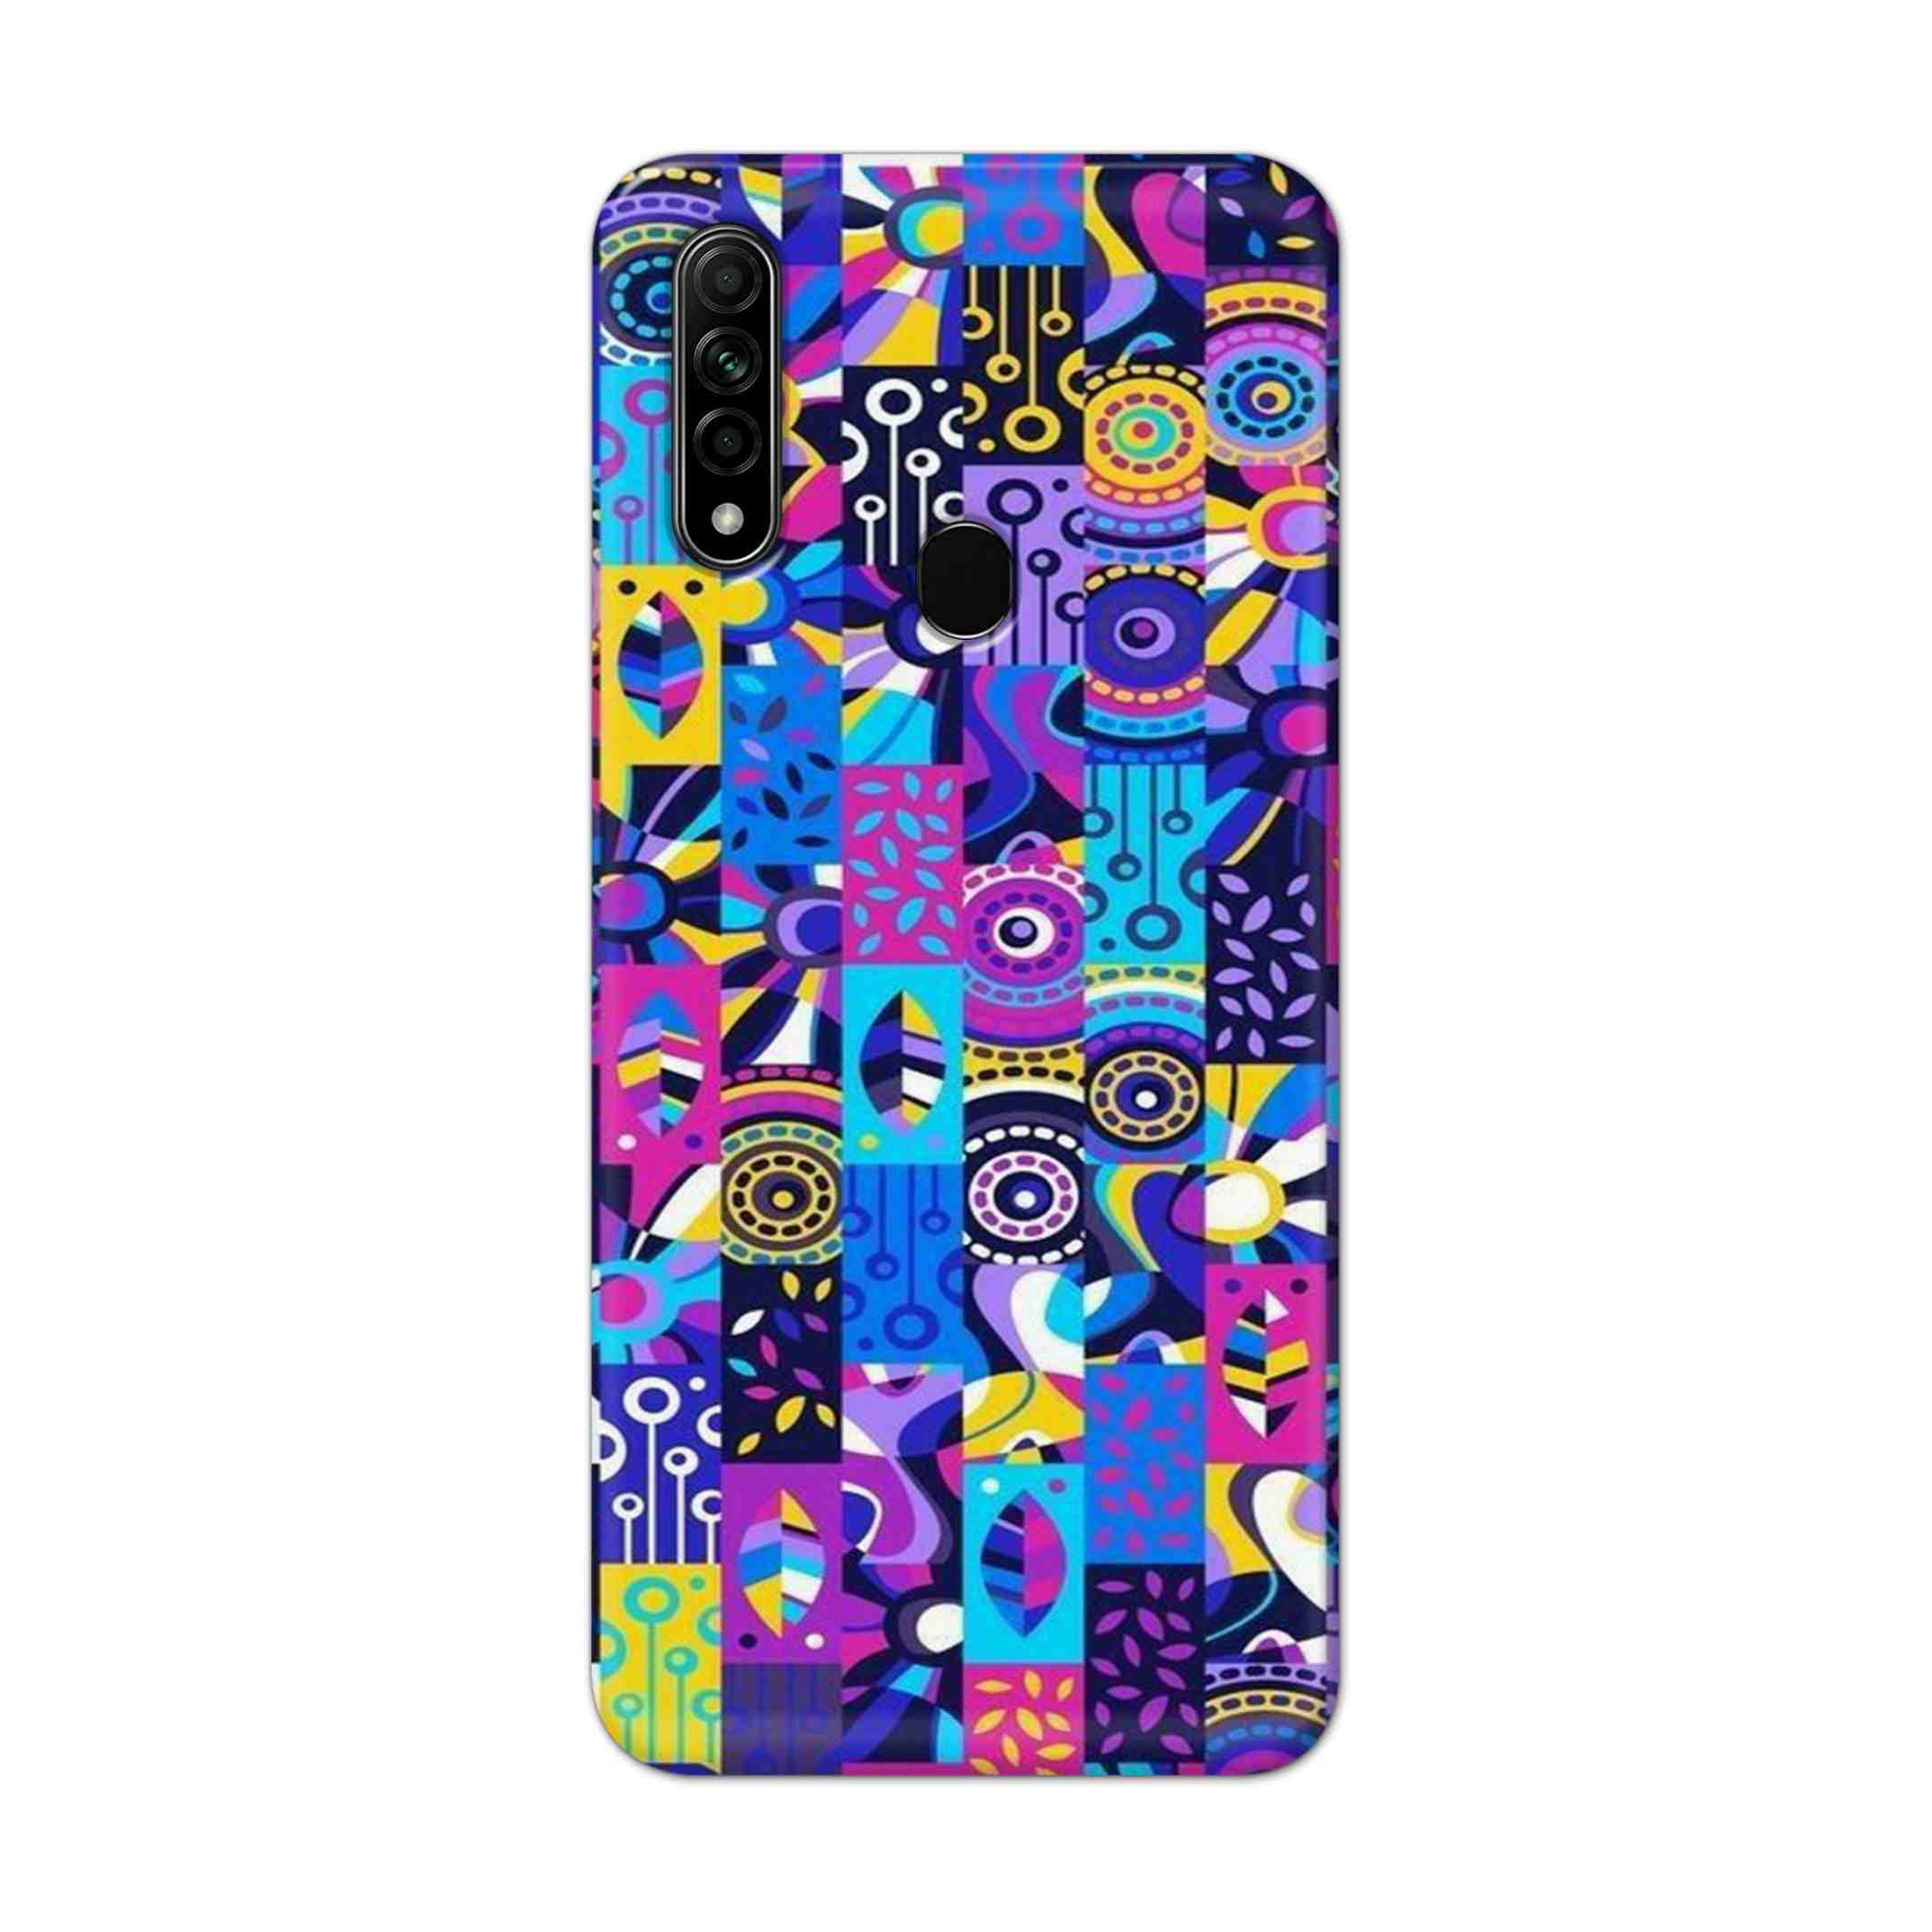 Buy Rainbow Art Hard Back Mobile Phone Case Cover For Oppo A31 (2020) Online